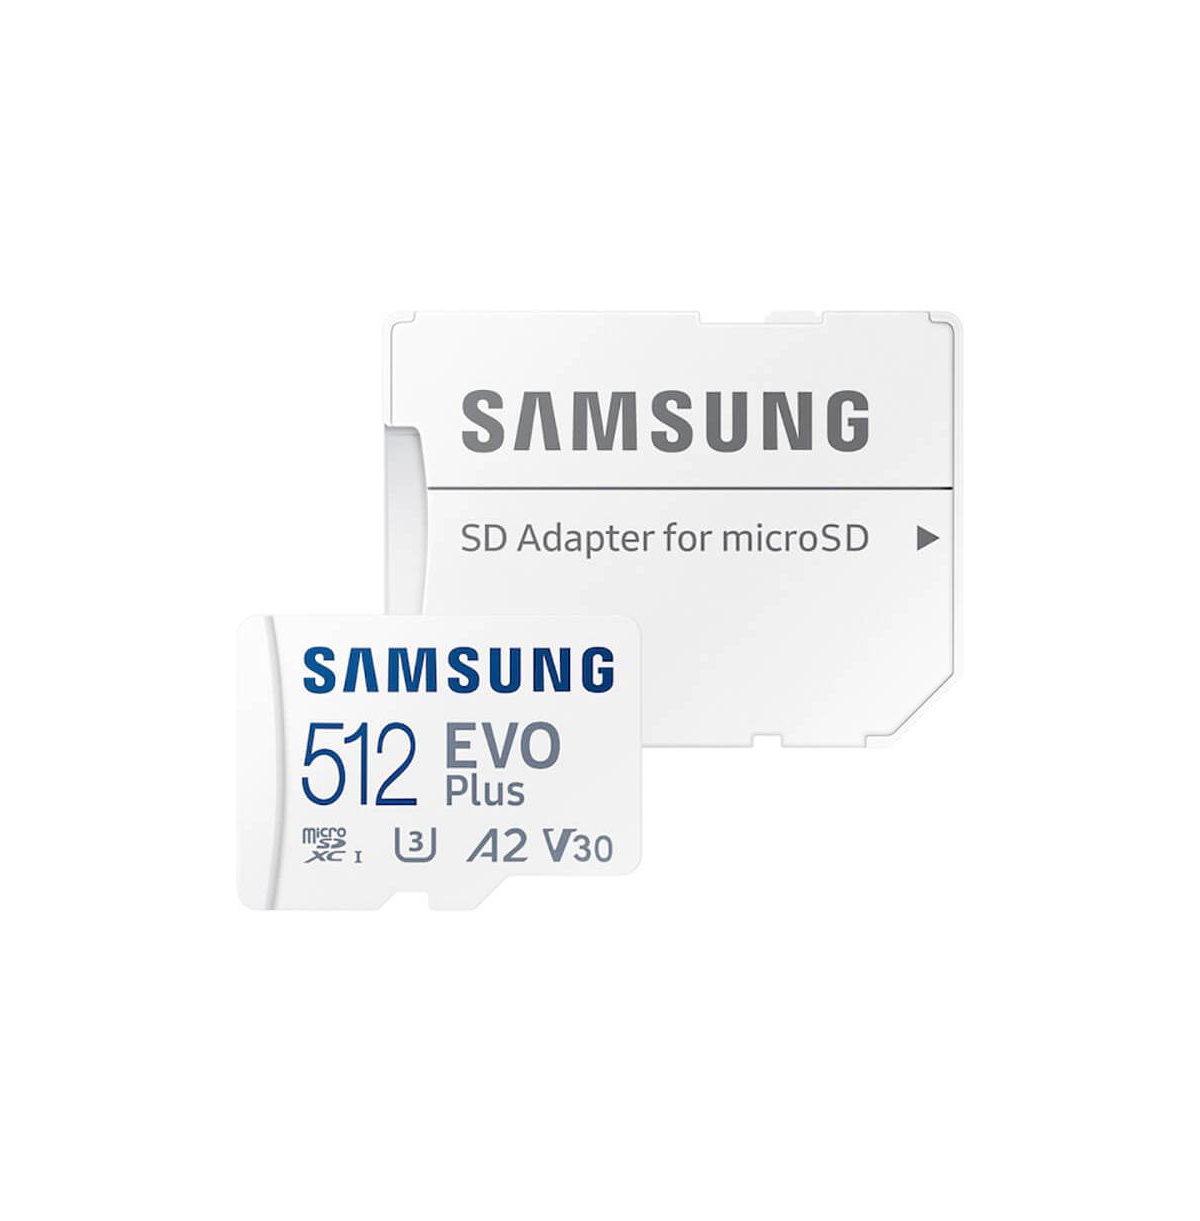 UPC 887276545769 product image for Samsung Evo Plus + Adapter microSDXC - 512GB | upcitemdb.com